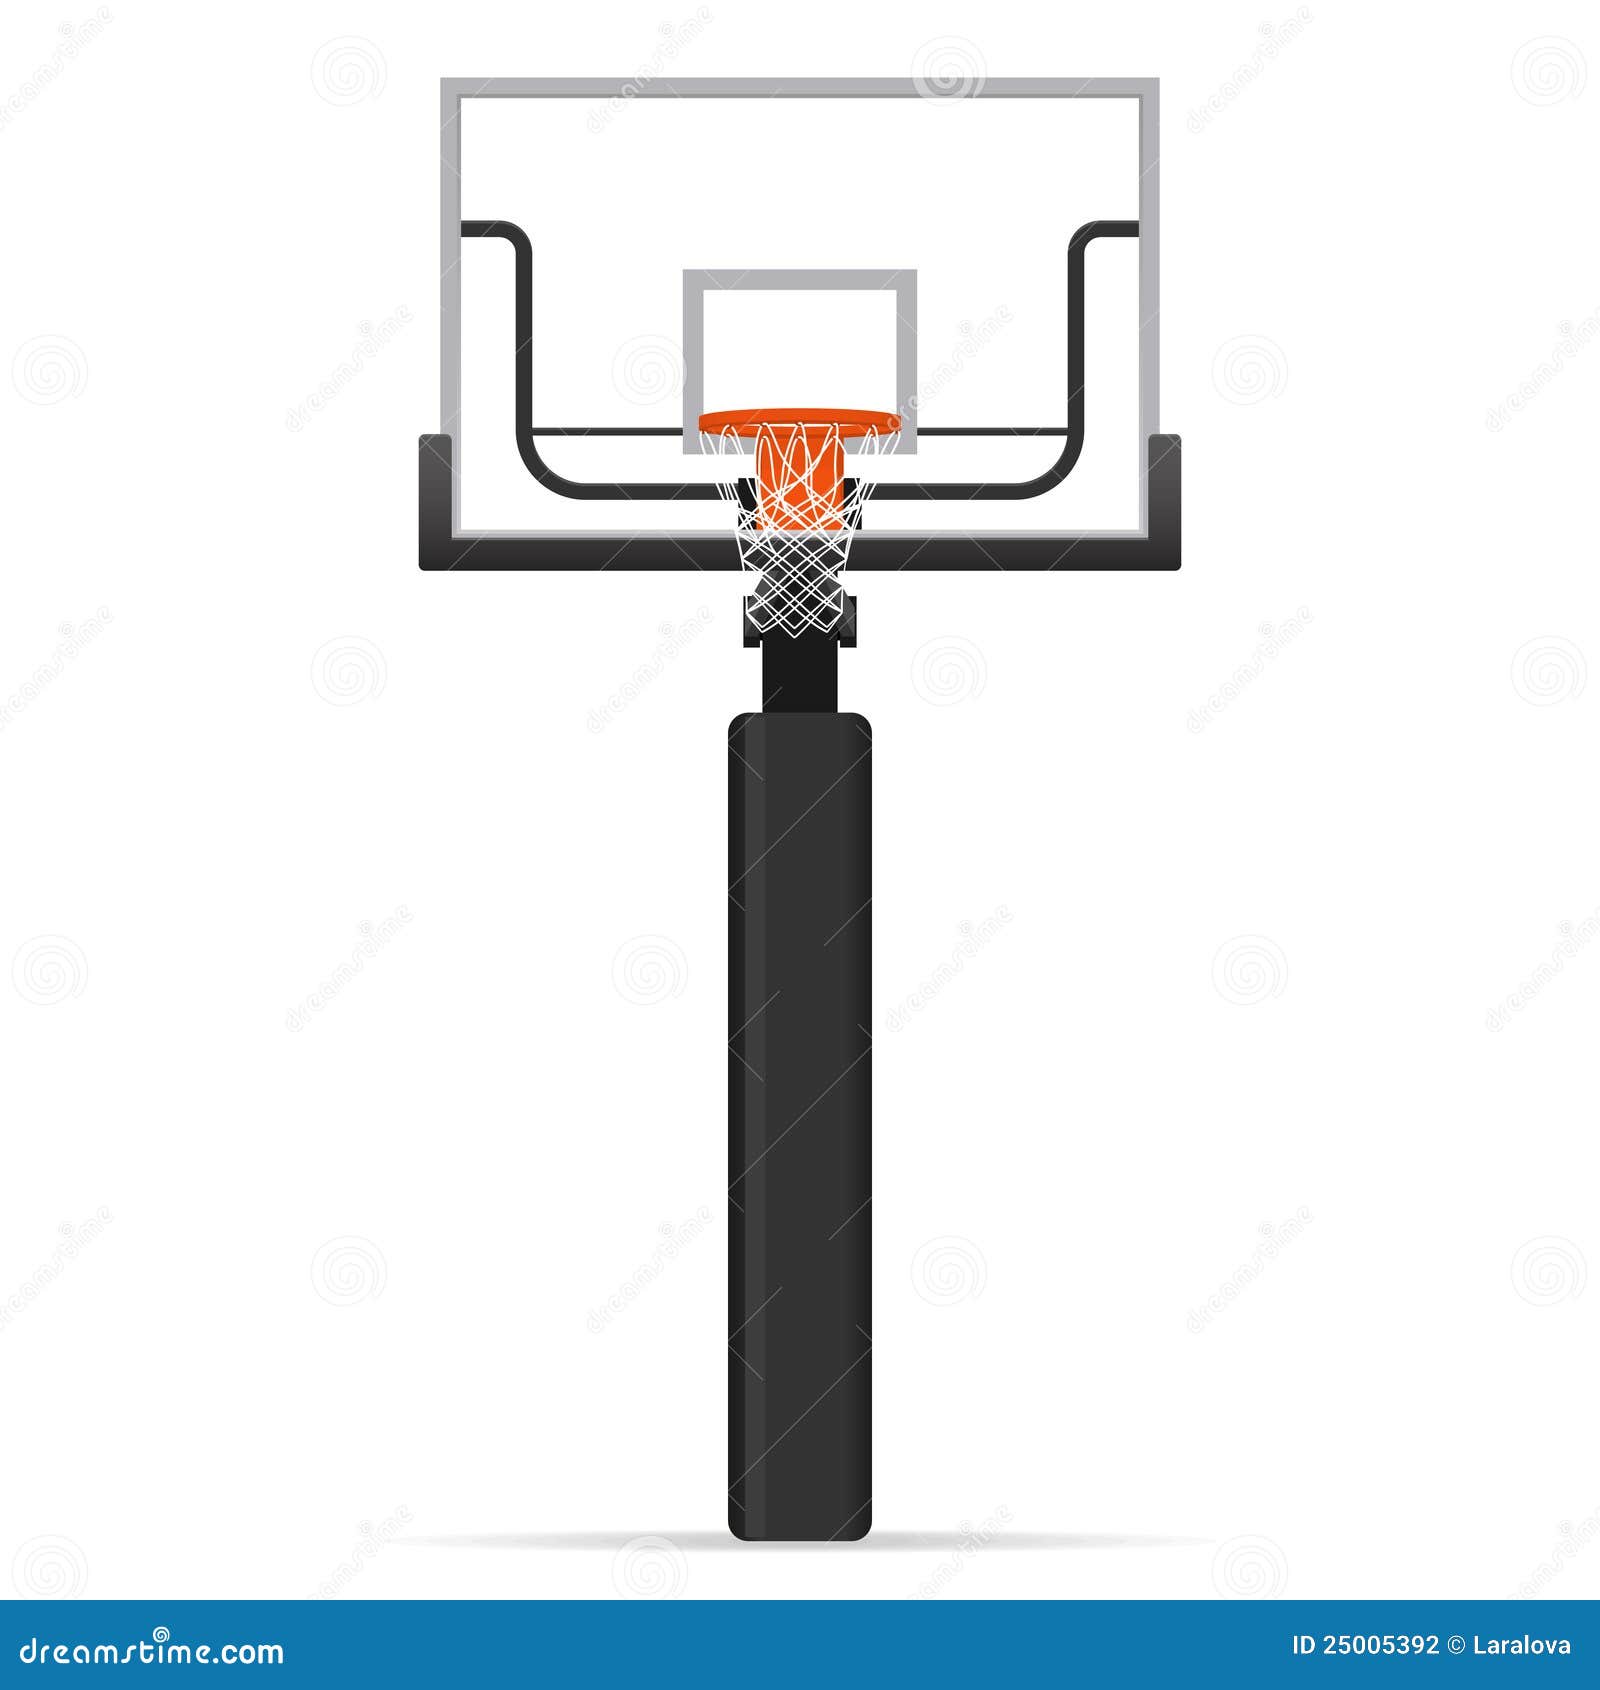 Basketball hoop stock vector. Illustration of basketball - 25005392